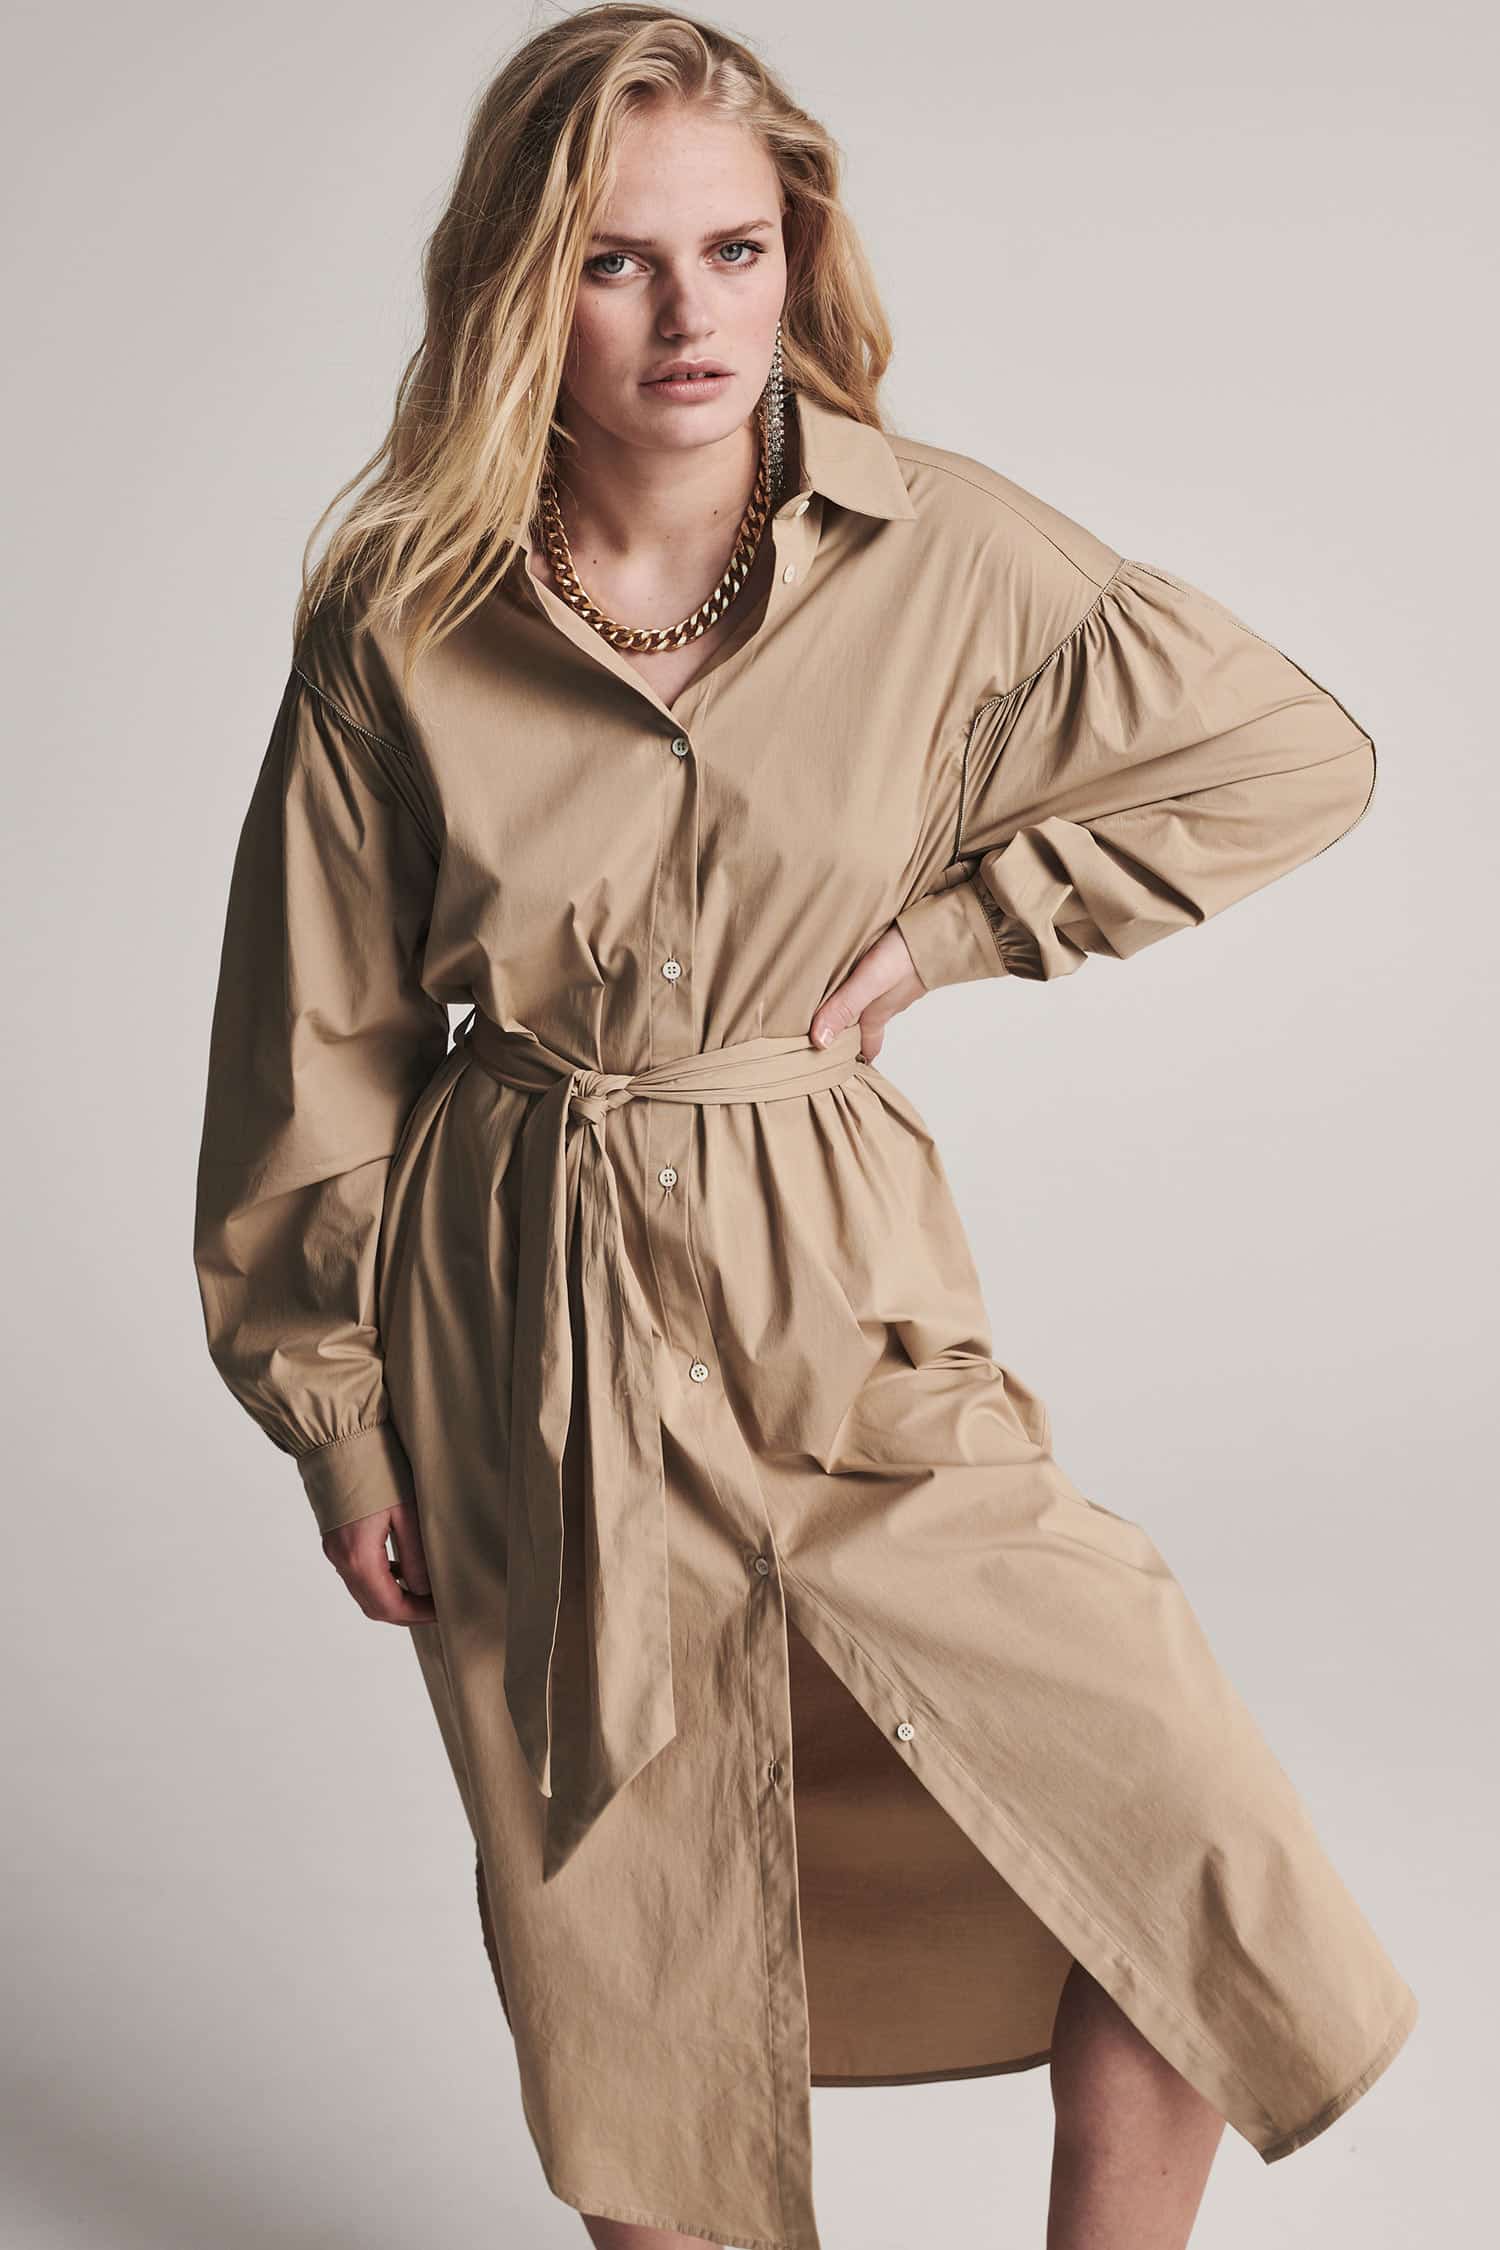 zuurgraad Aziatisch Vlieger Margareta Concept Store | Donao Cotton Poplin Dress Camel